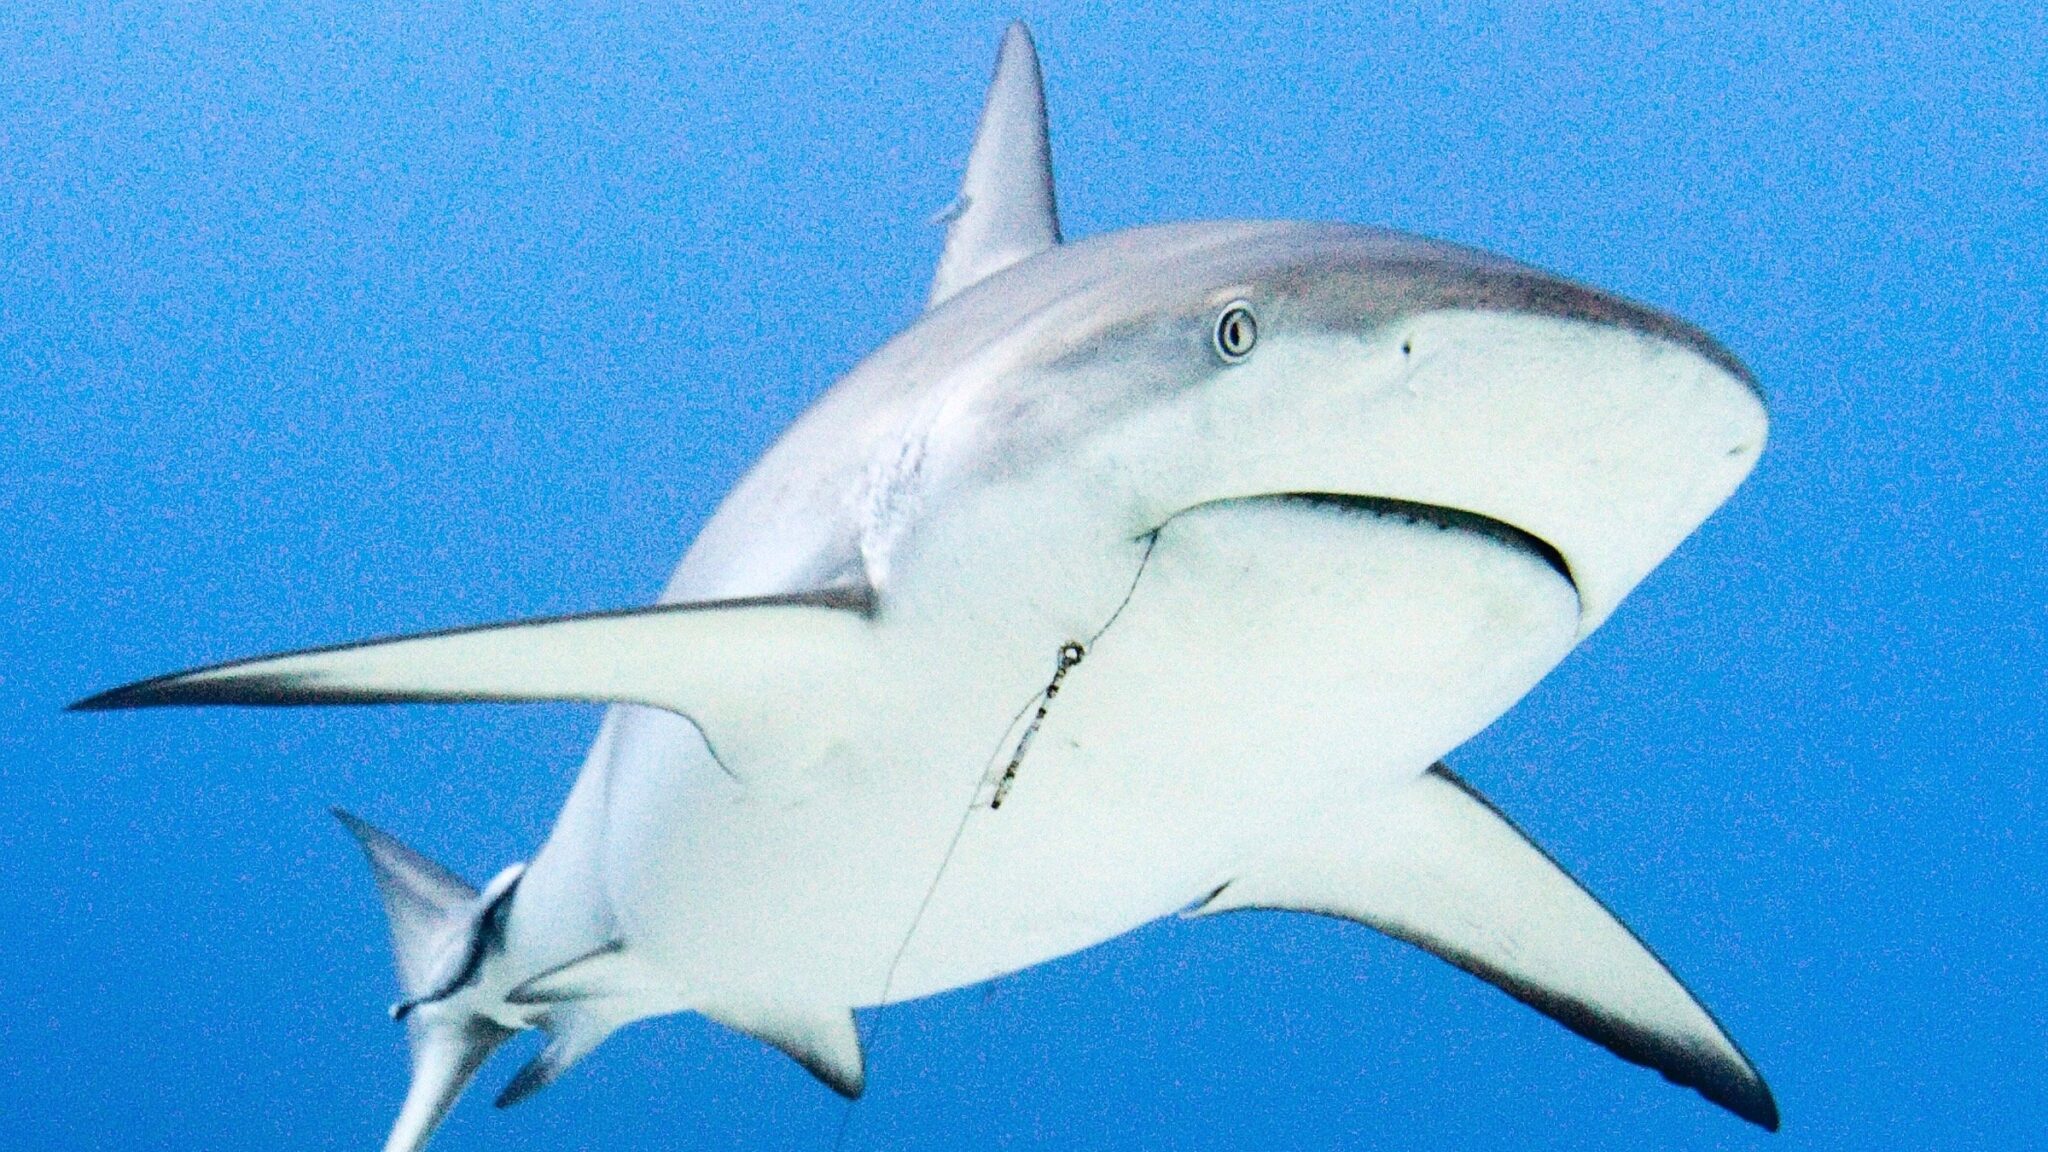 House Passes Legislation Banning The U.S. Shark Fin Trade